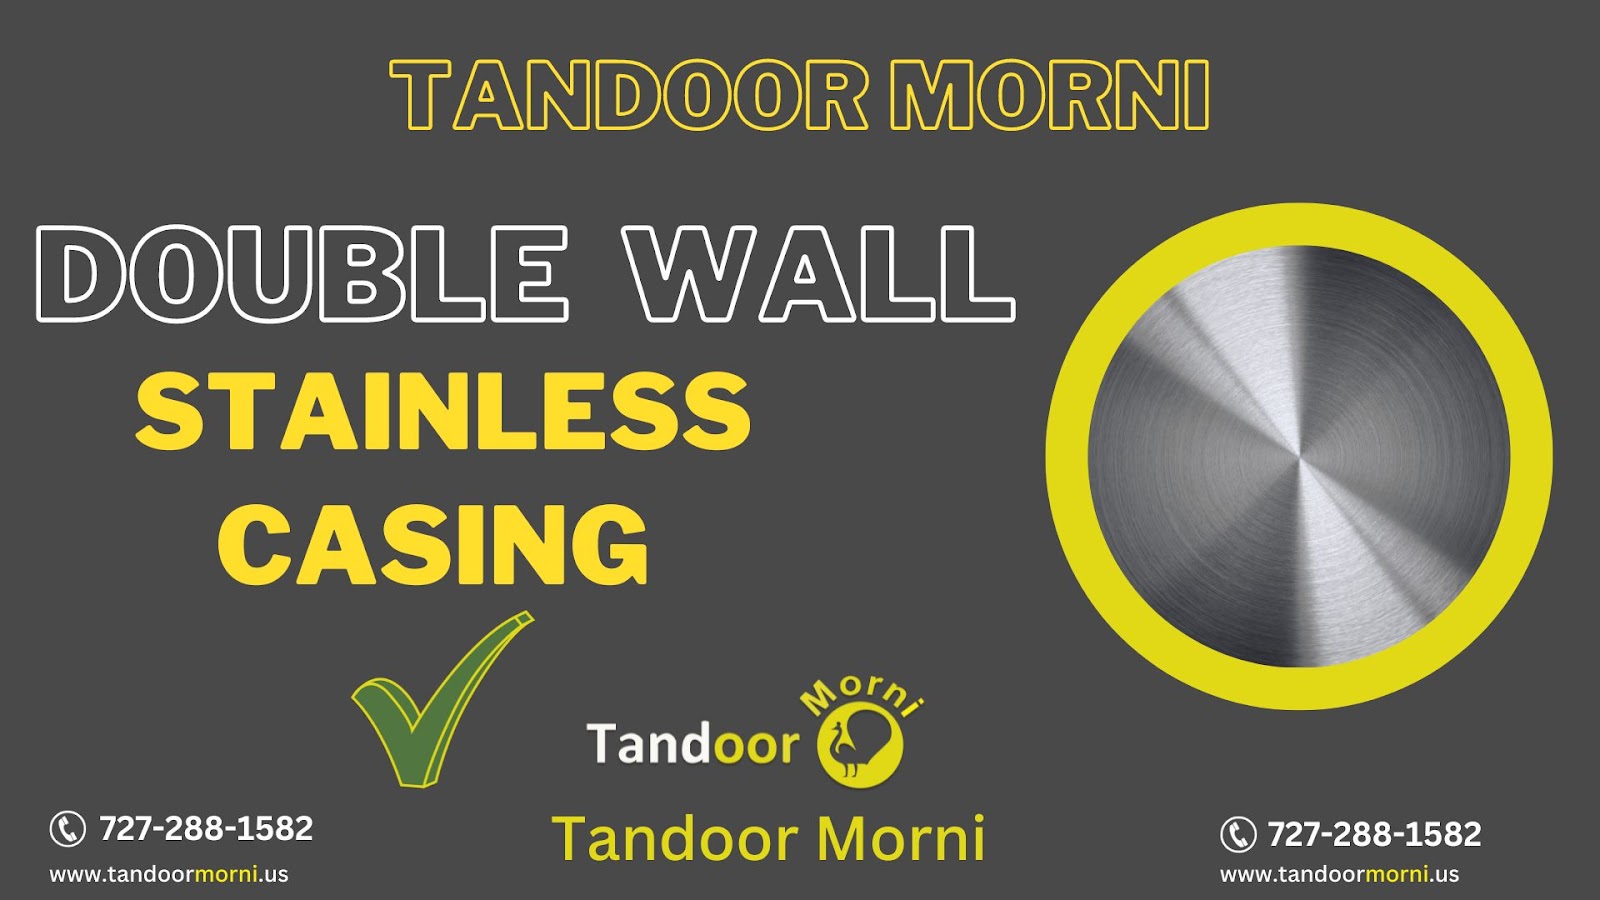 Other tandoor competitors, such as Omcan Tandoor, Puri Tandoor, and Luxury Tandoor, do not have the double wall stainless steel casing that Tandoor Morni Tandoor possesses, offering double insulation.